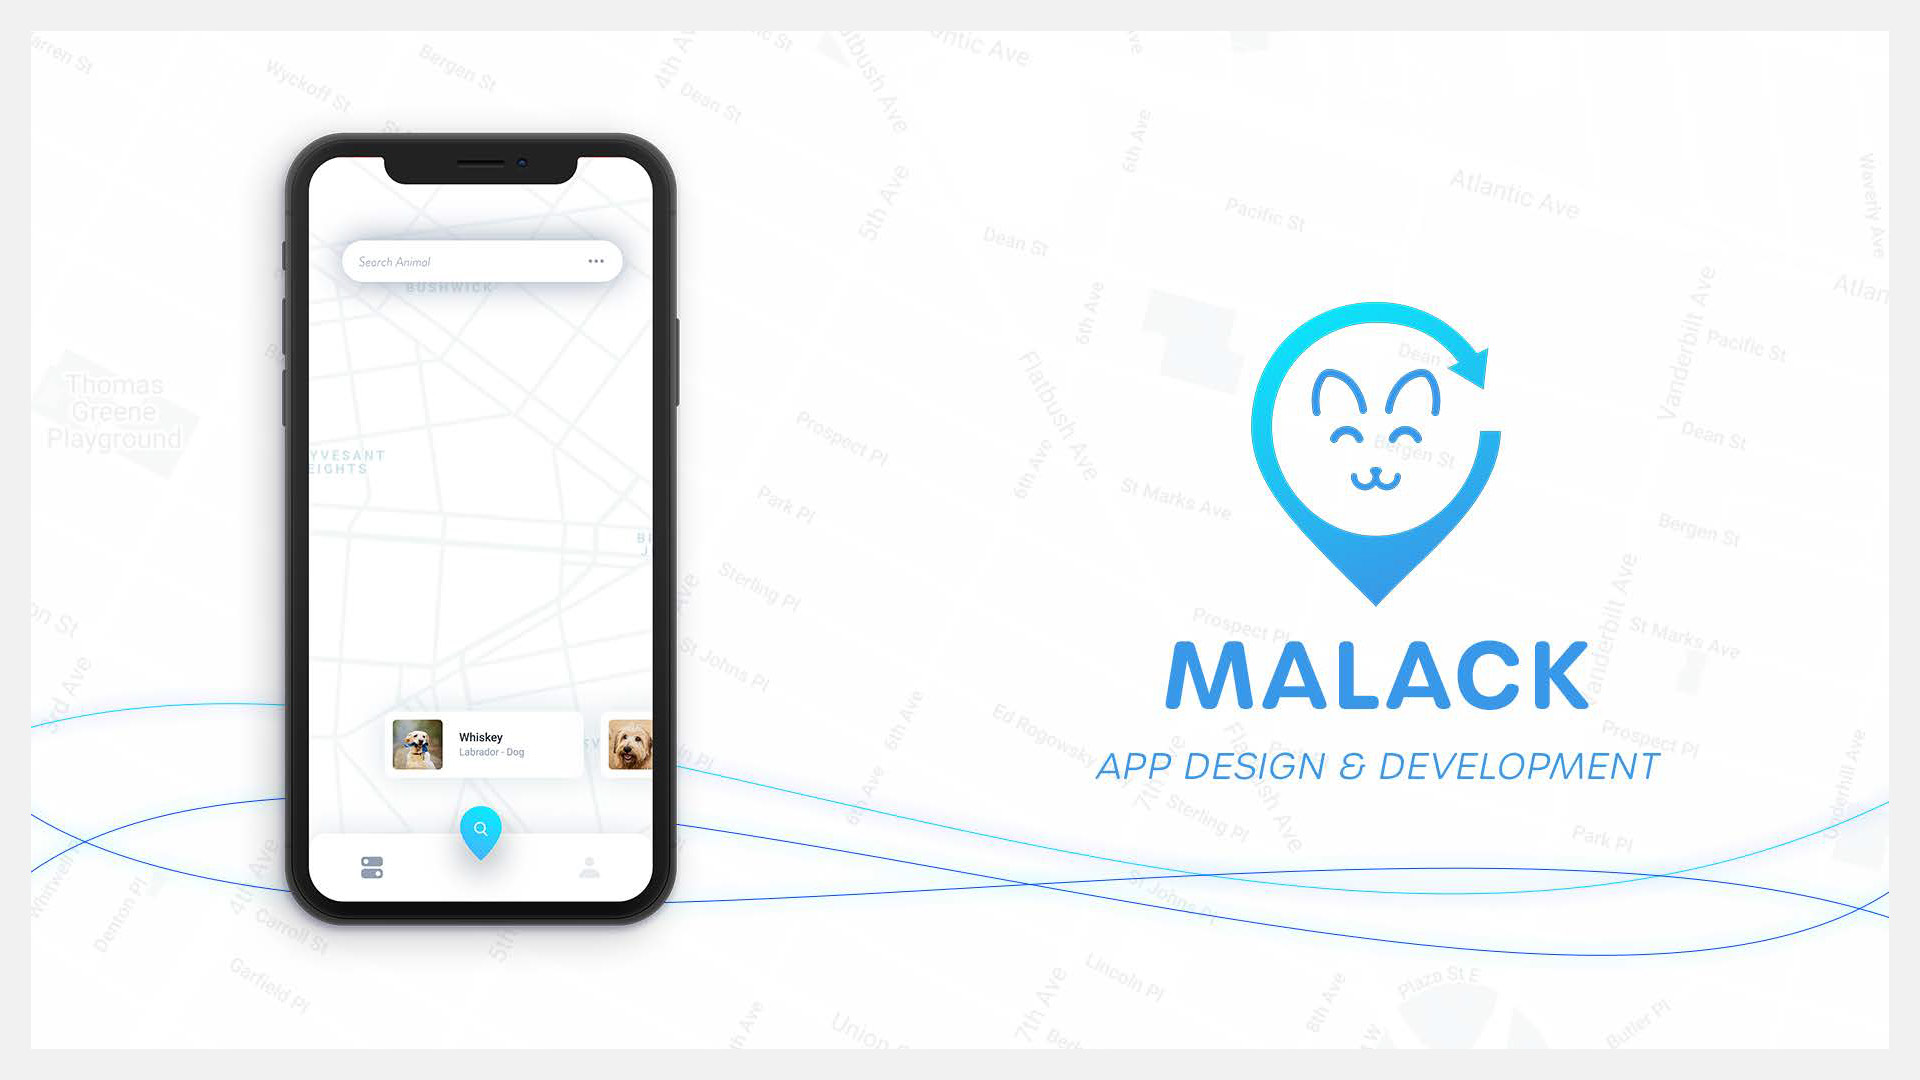 Malack - An mobile app development Case Study